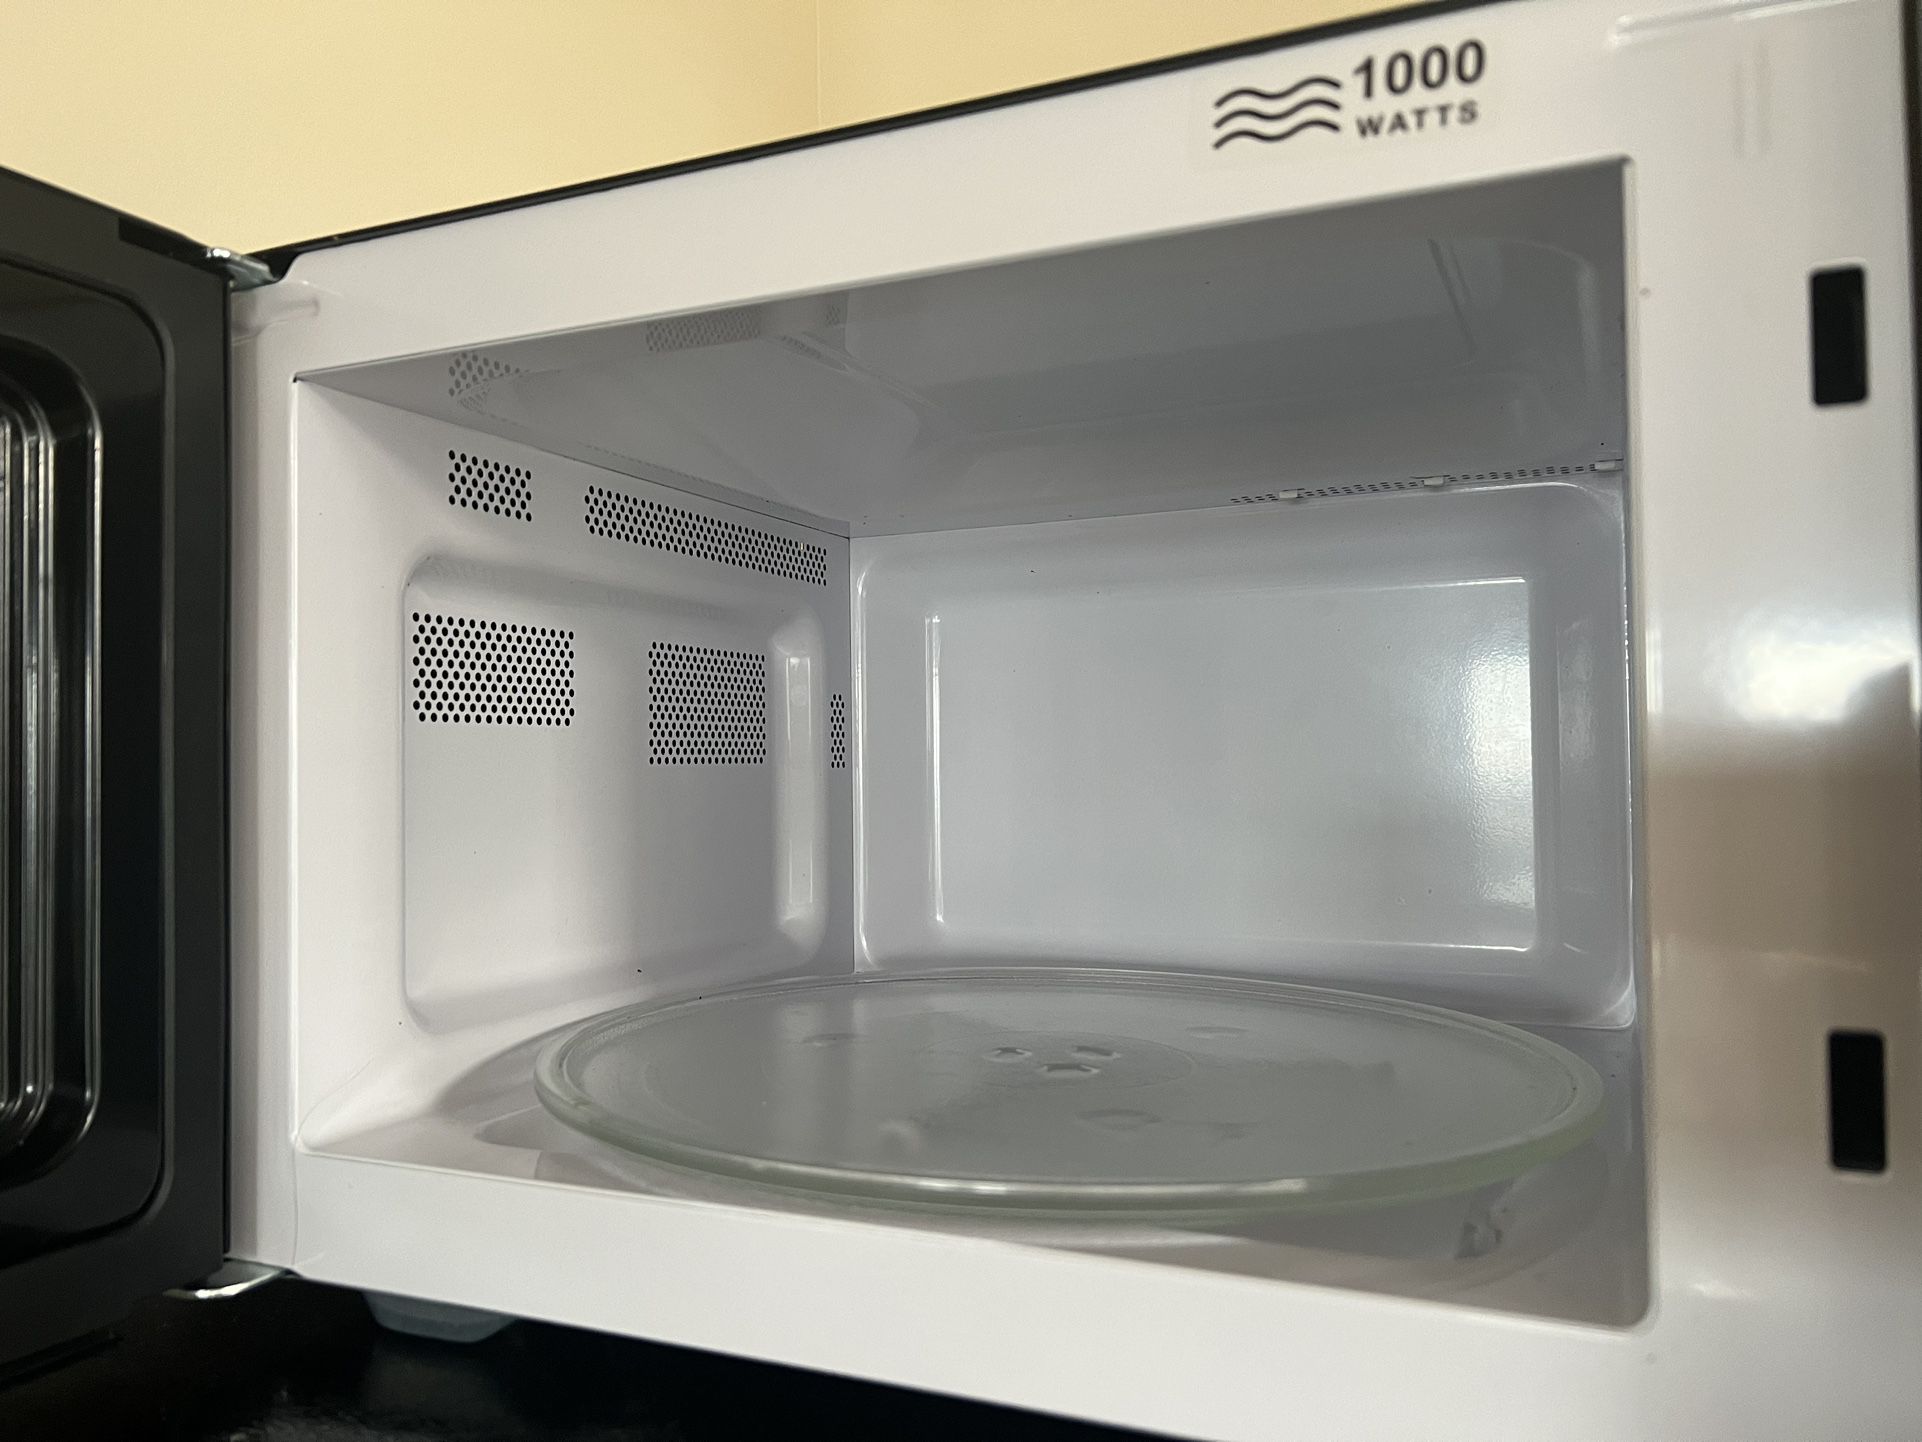 Black+Decker 1.1 Cu Ft 1000W Microwave Oven - Black for Sale in Houston, TX  - OfferUp